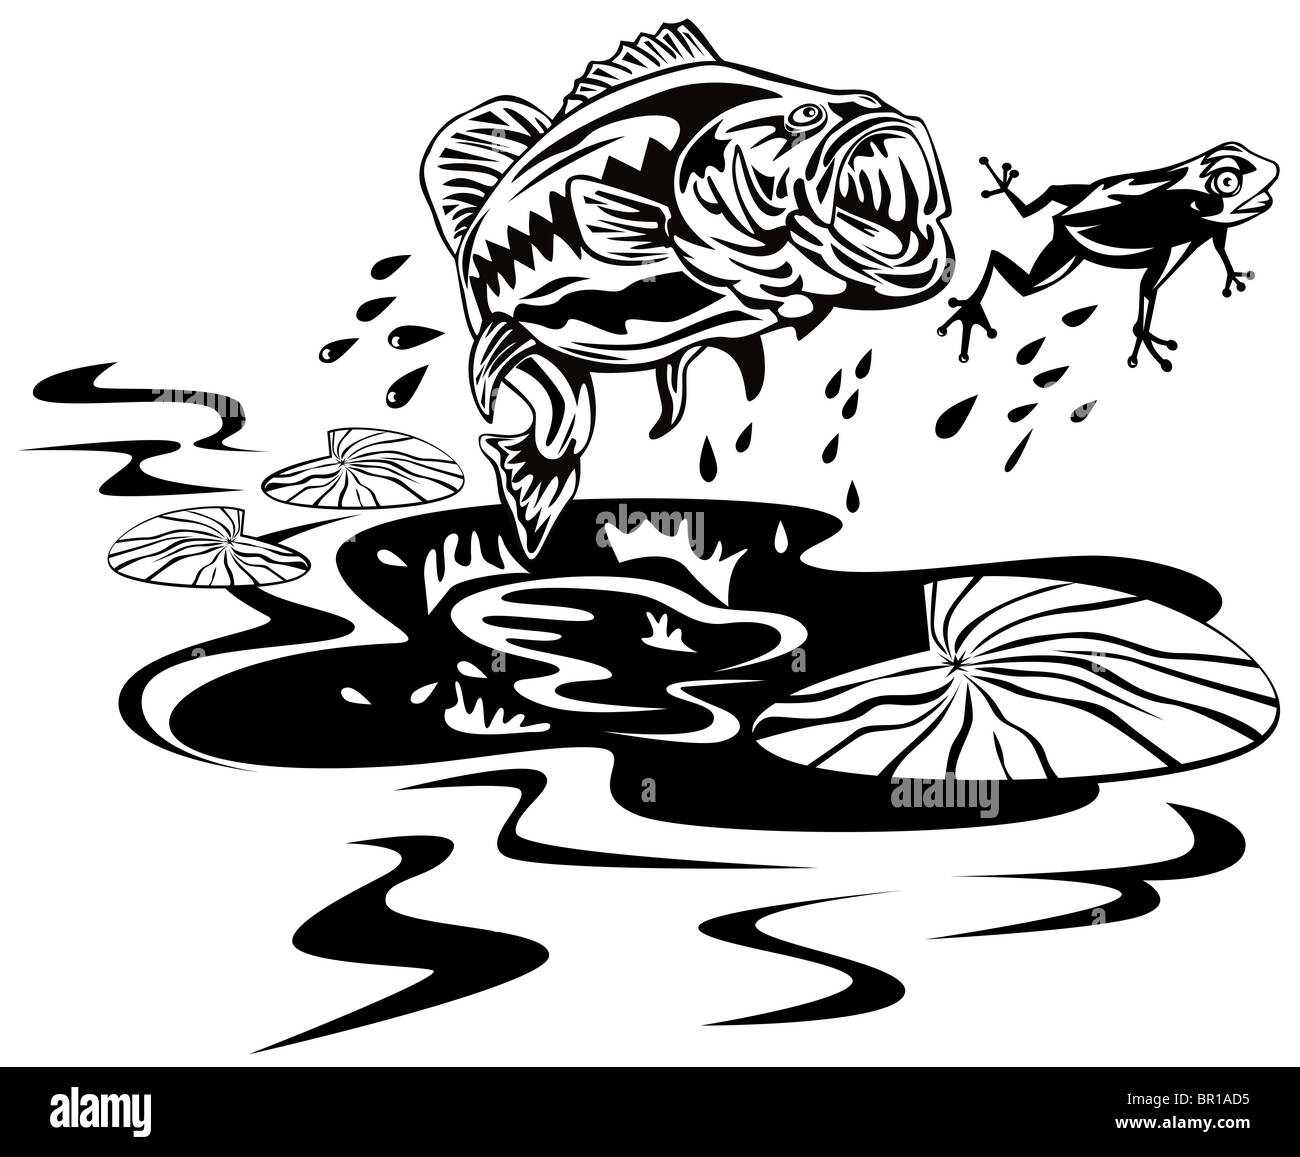 retro woodcut style illustration of a largemouth bass fish jumping catching frog on isolated white background Stock Photo